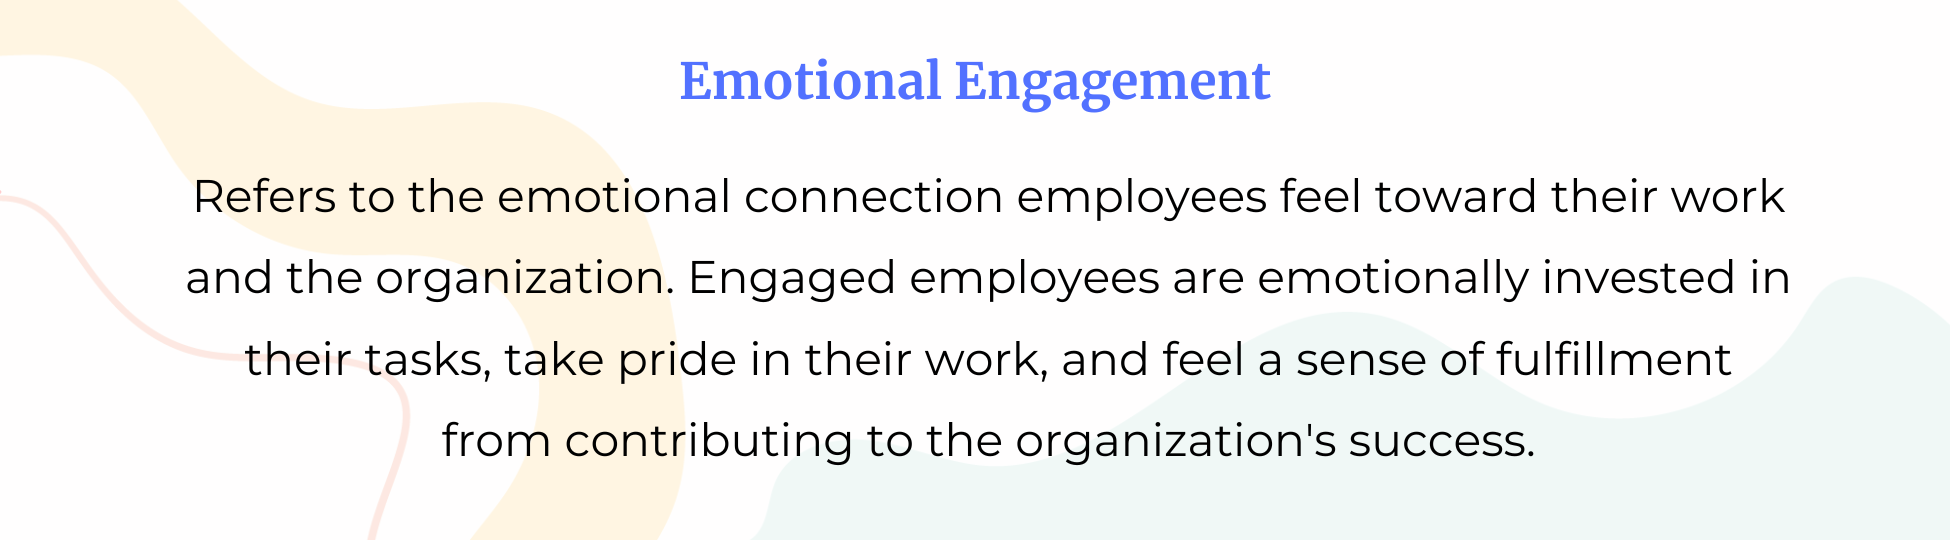 emotional engagement